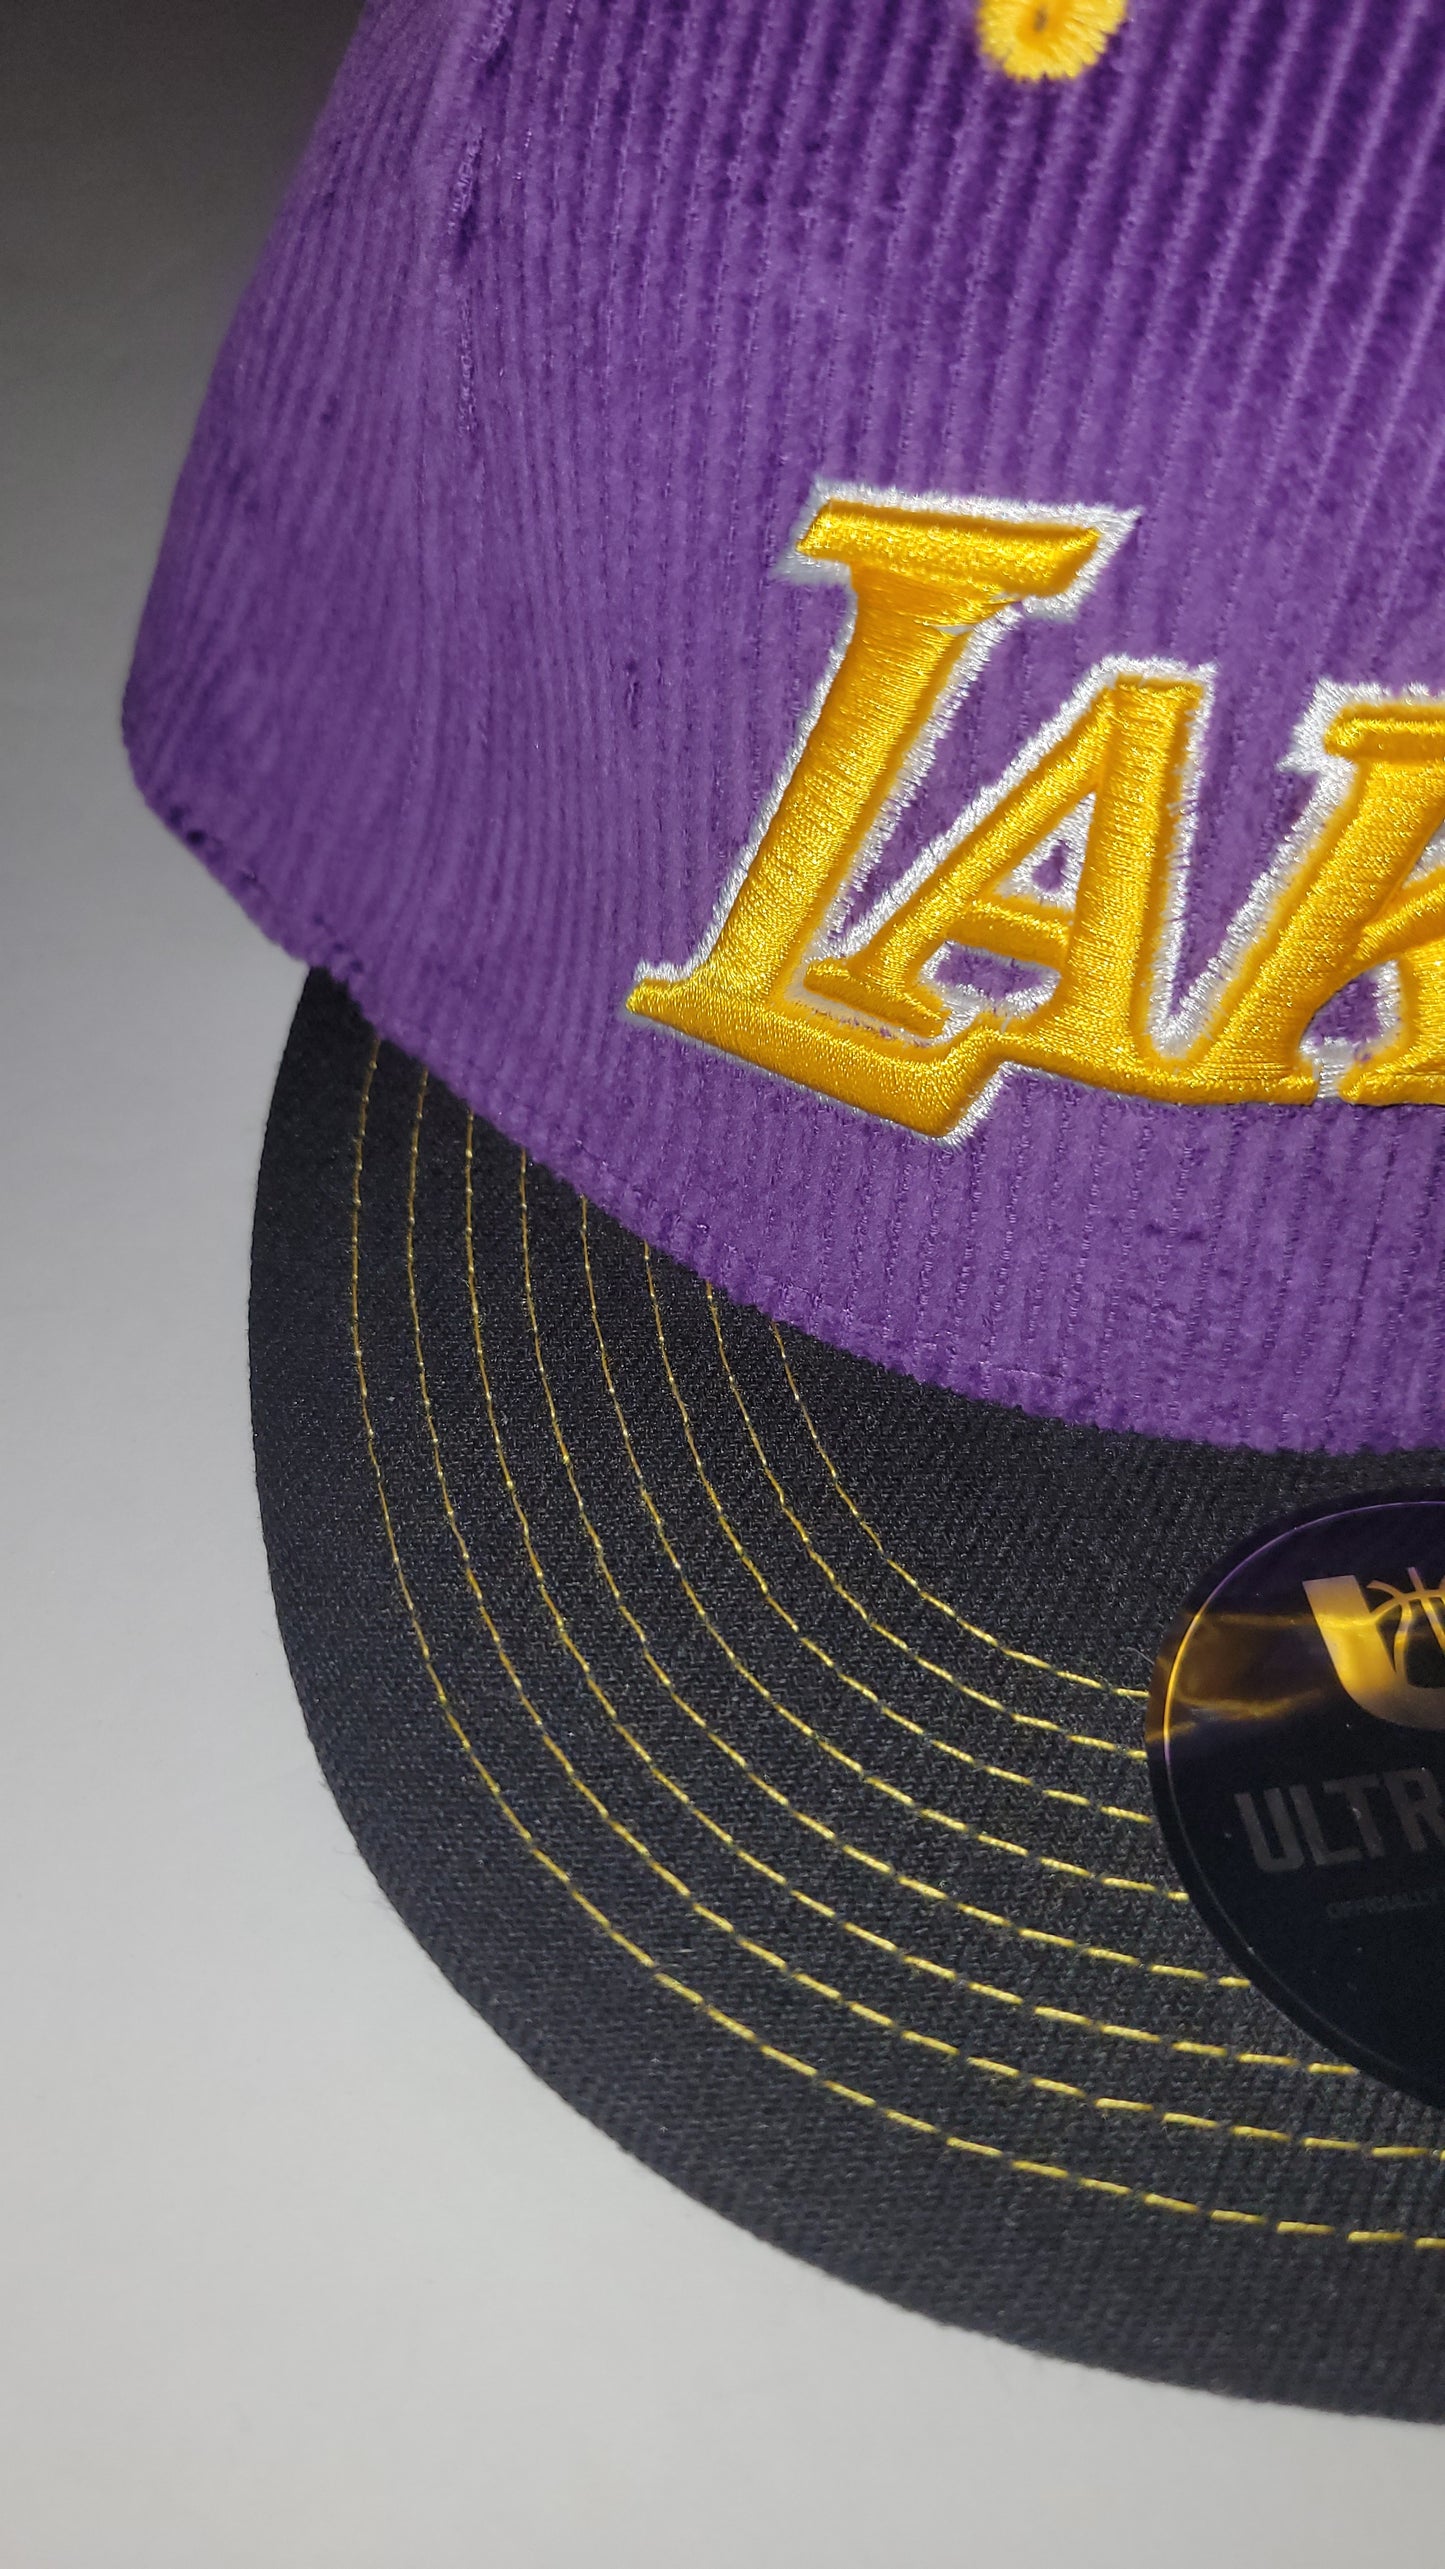 LA Lakers Ultra Game